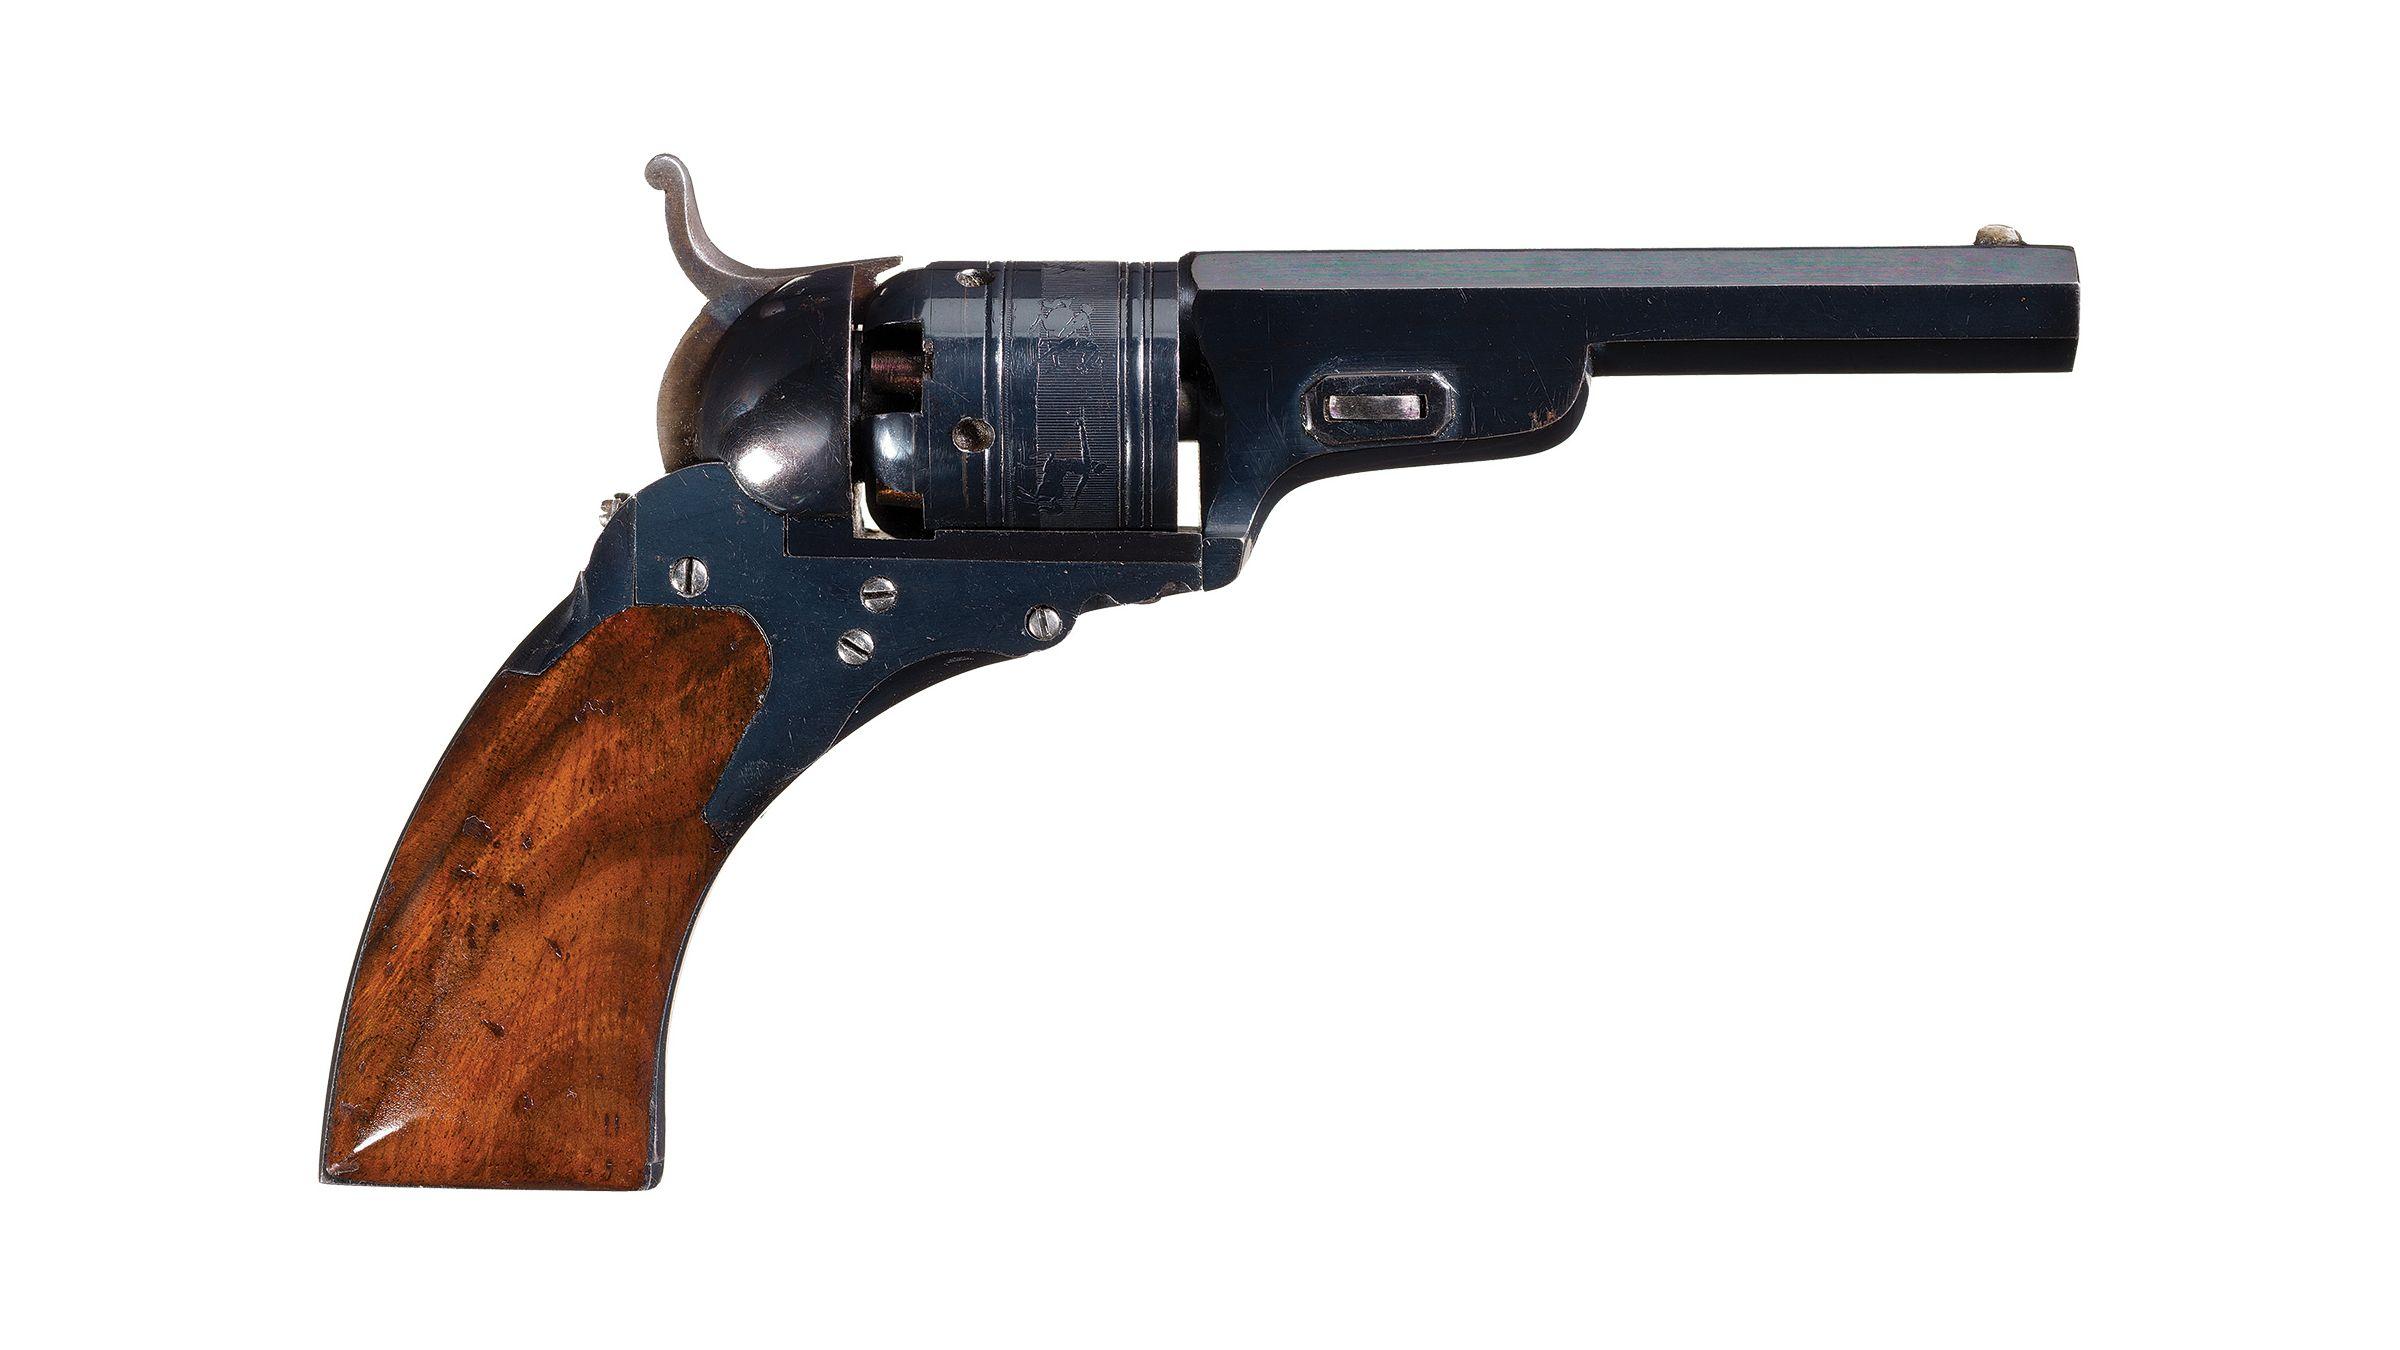 Factory Cased Colt No.1 Pocket Model "Baby" Paterson Revolver